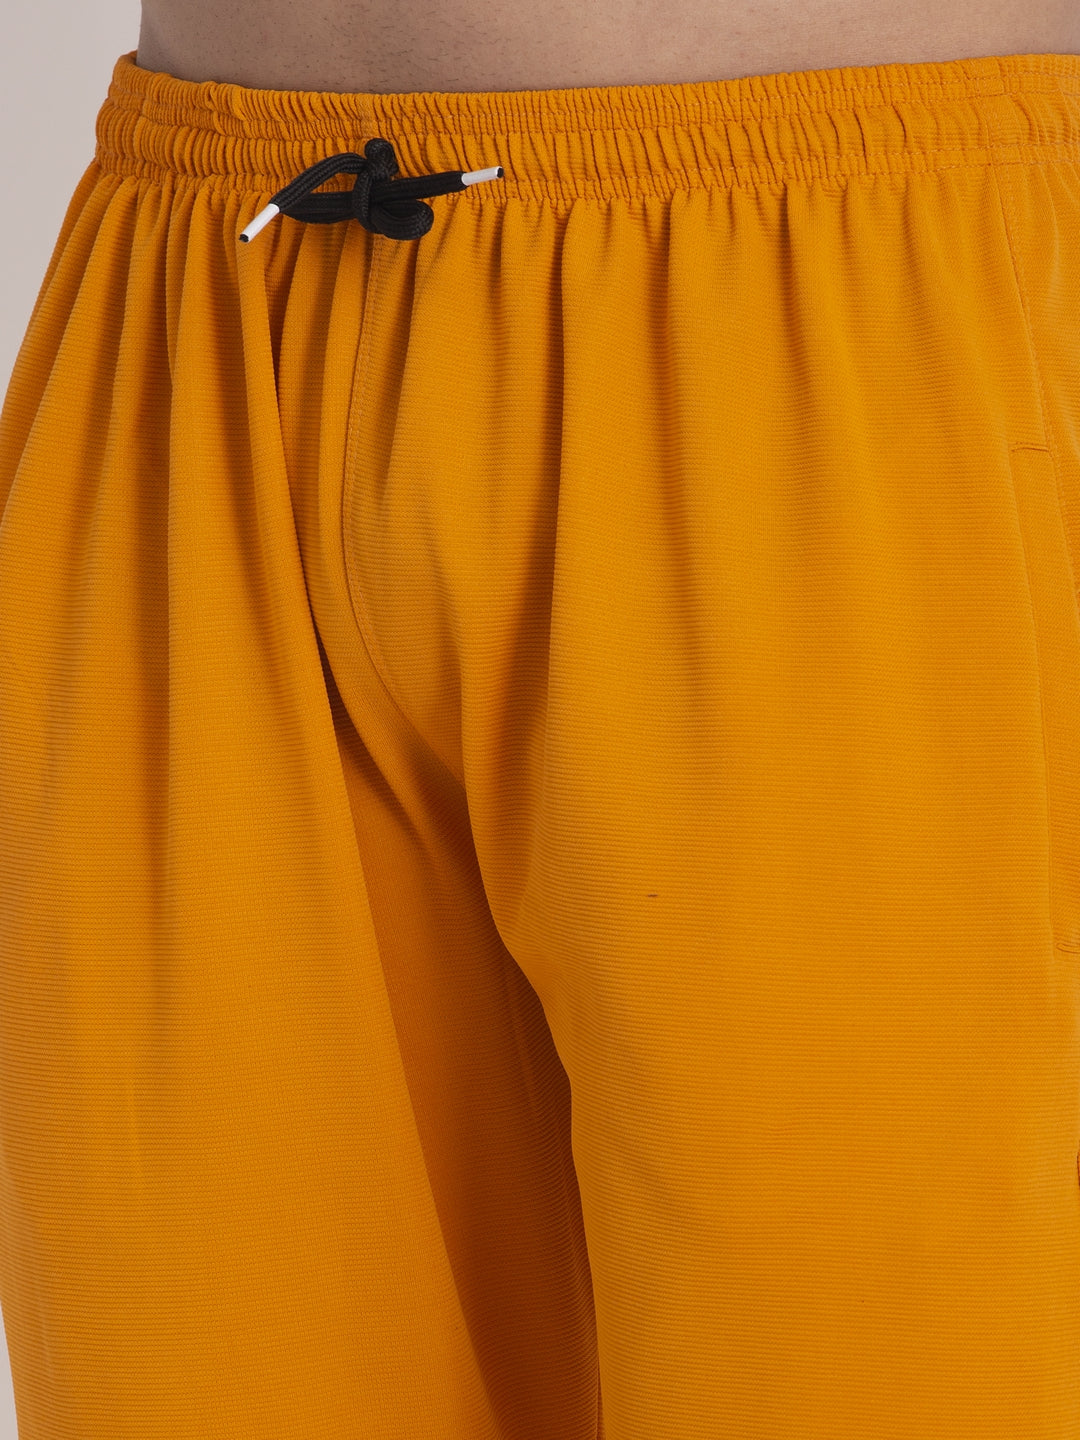 Jainish Men's Mustard Solid Track Pants